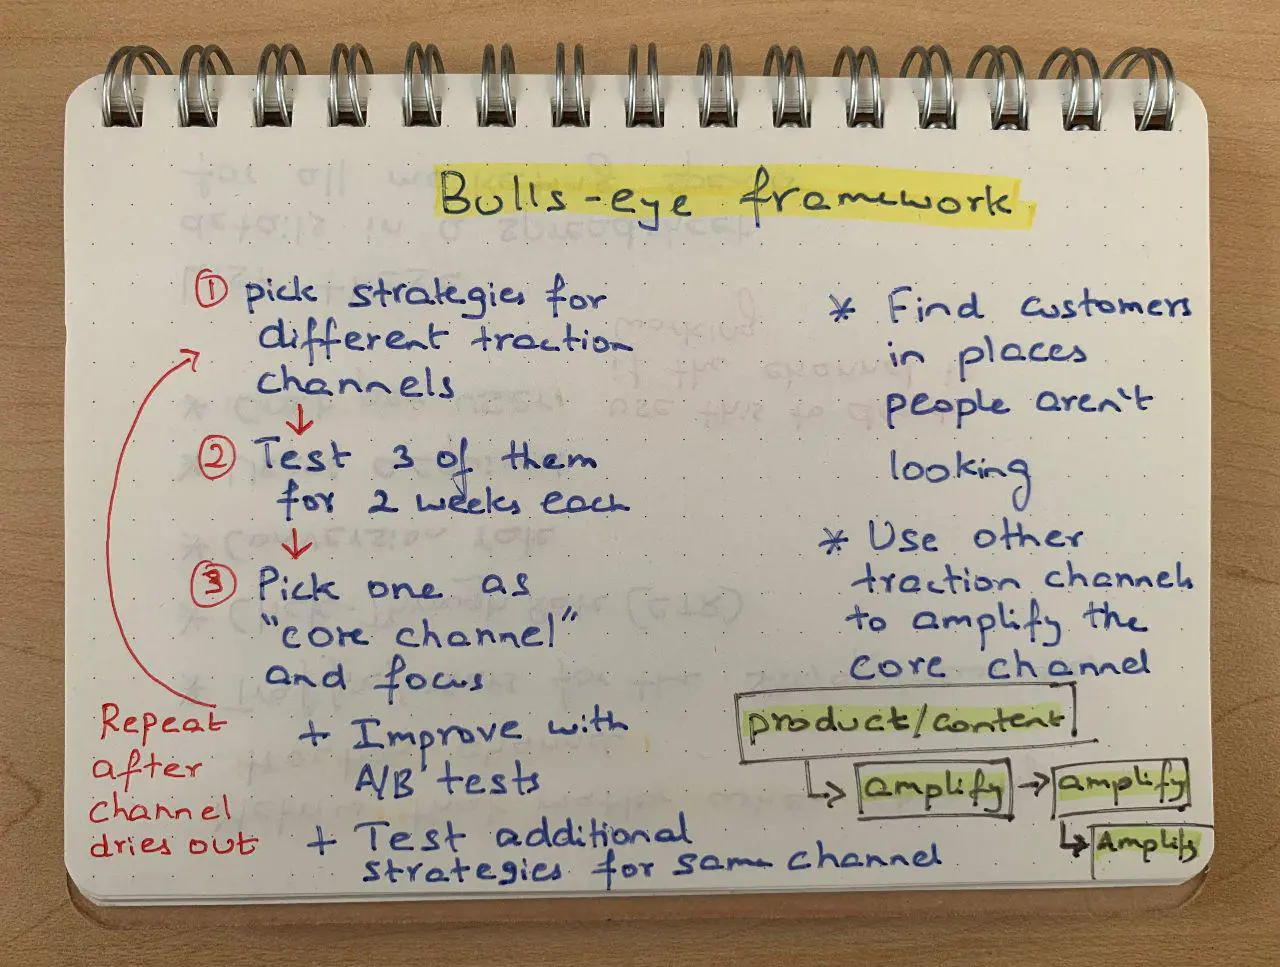 Bulls-eye framework